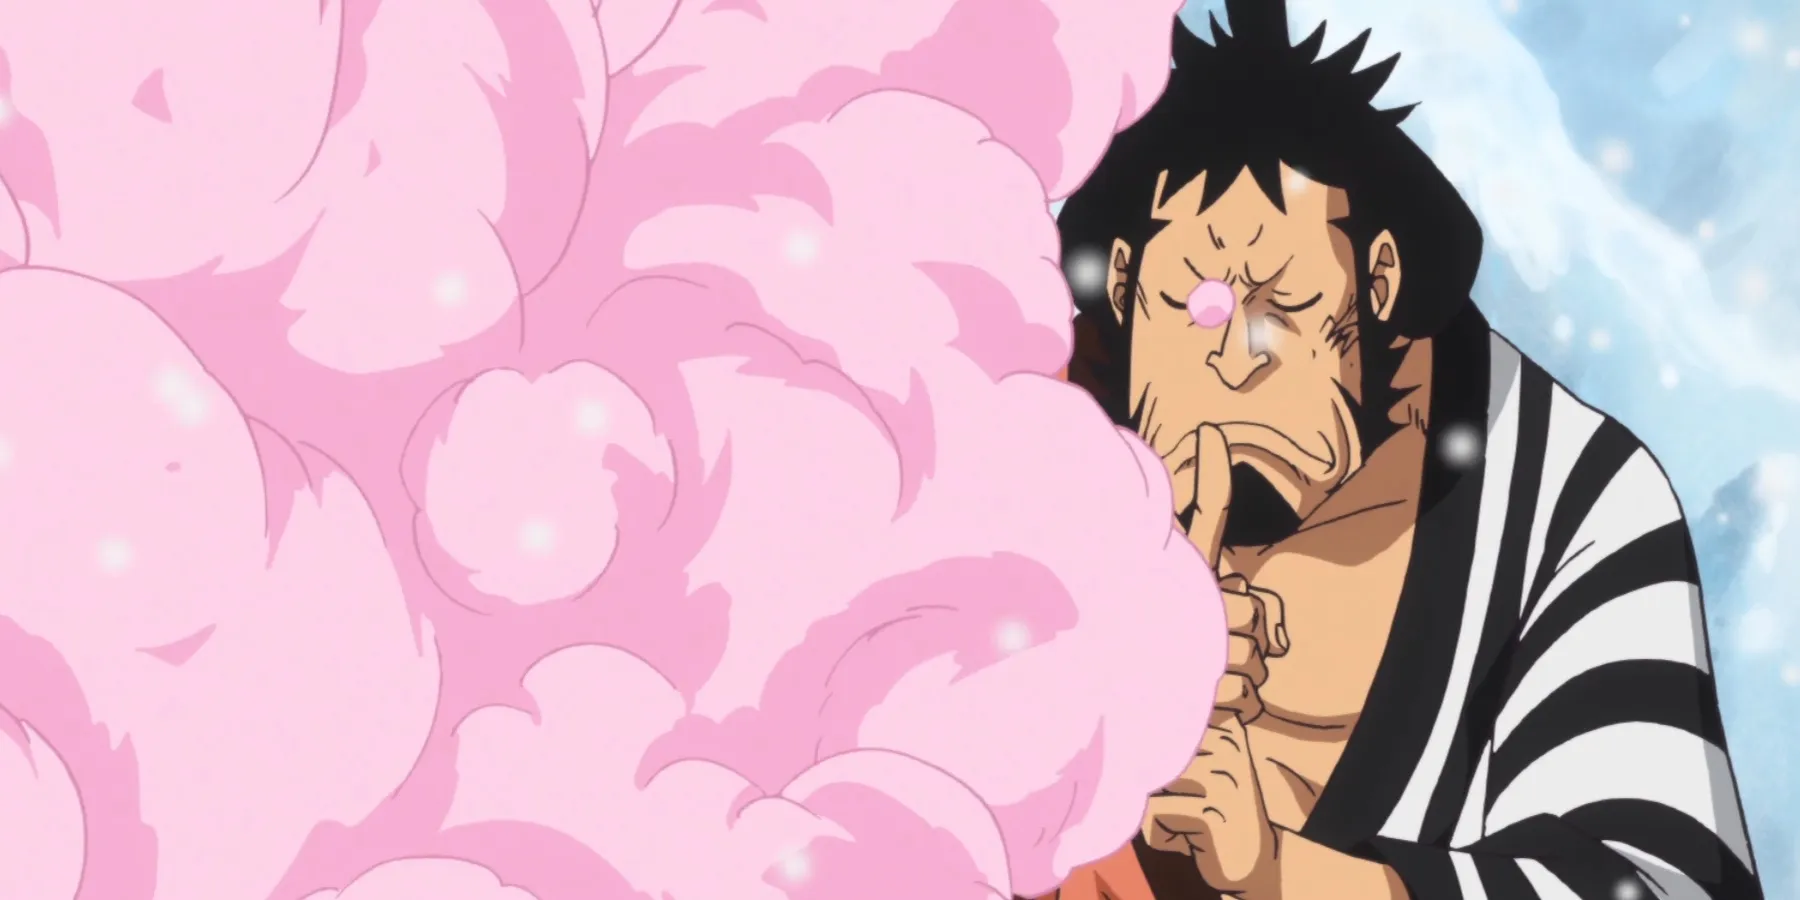 One Piece Kin’emon using his devil fruit power